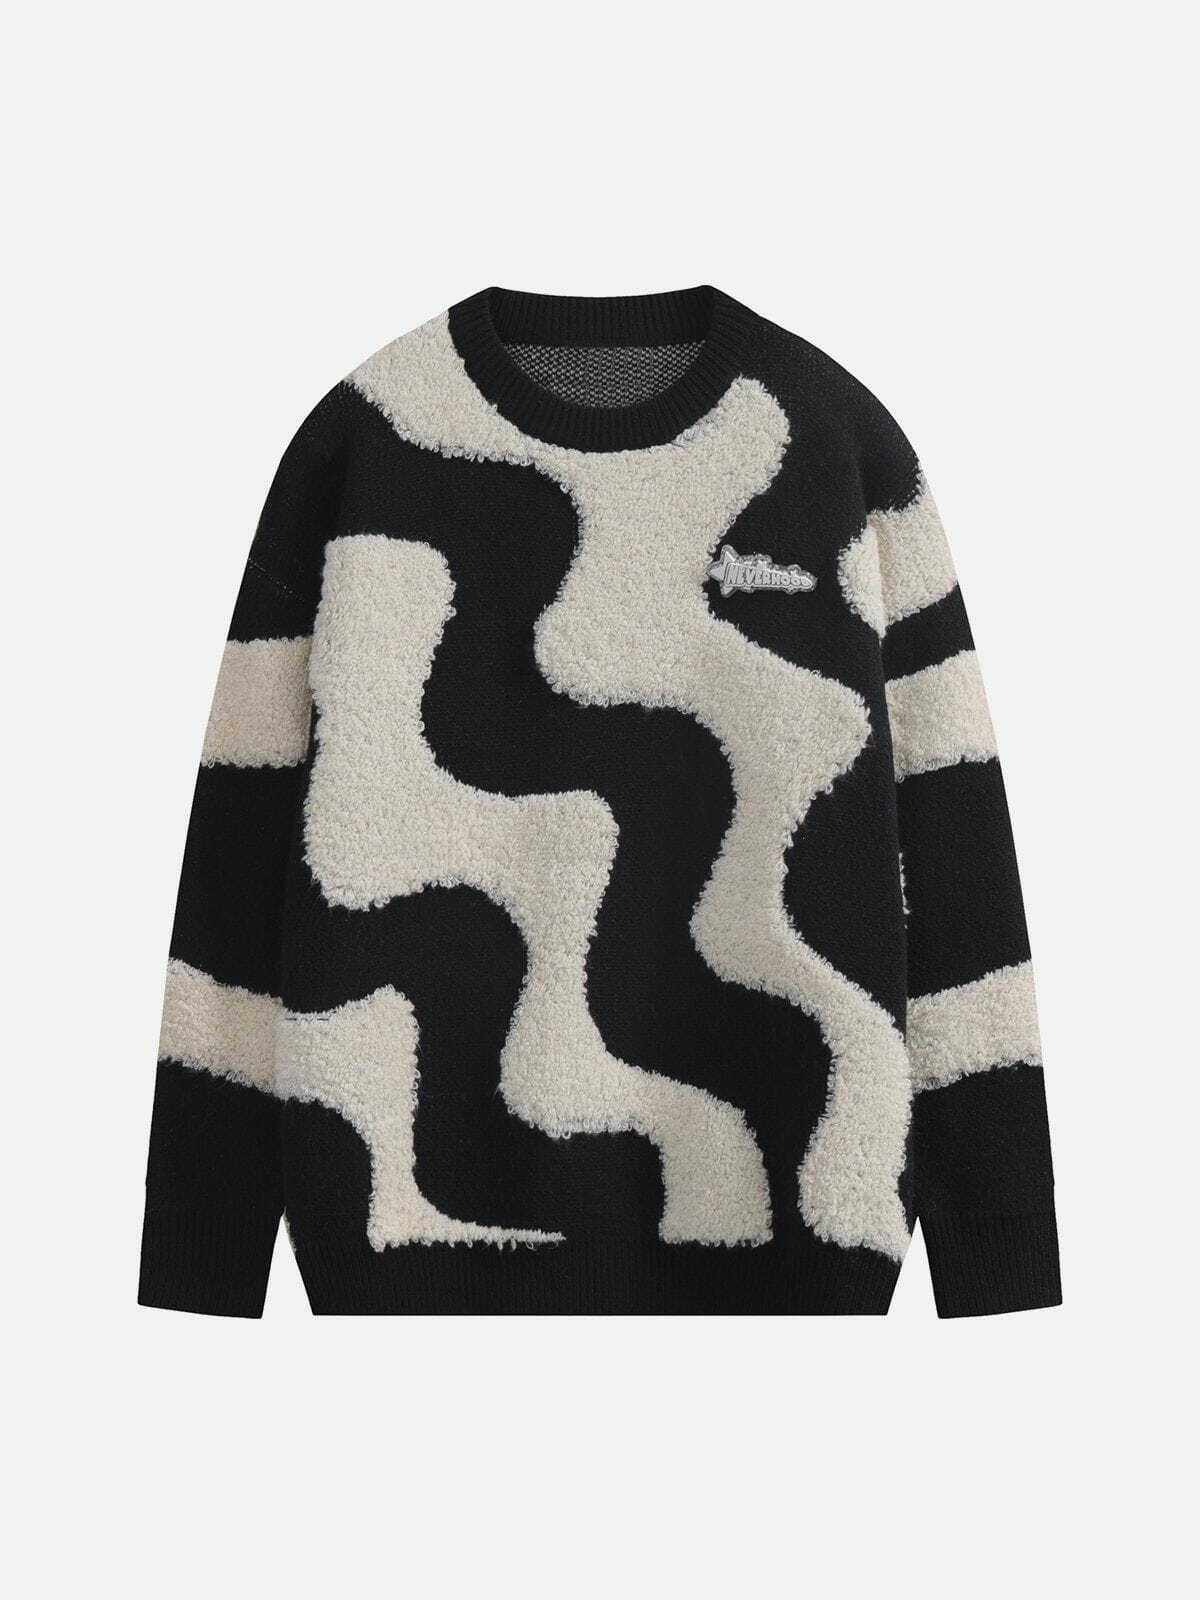 y2k flocking sweater edgy design & retro vibes 6144